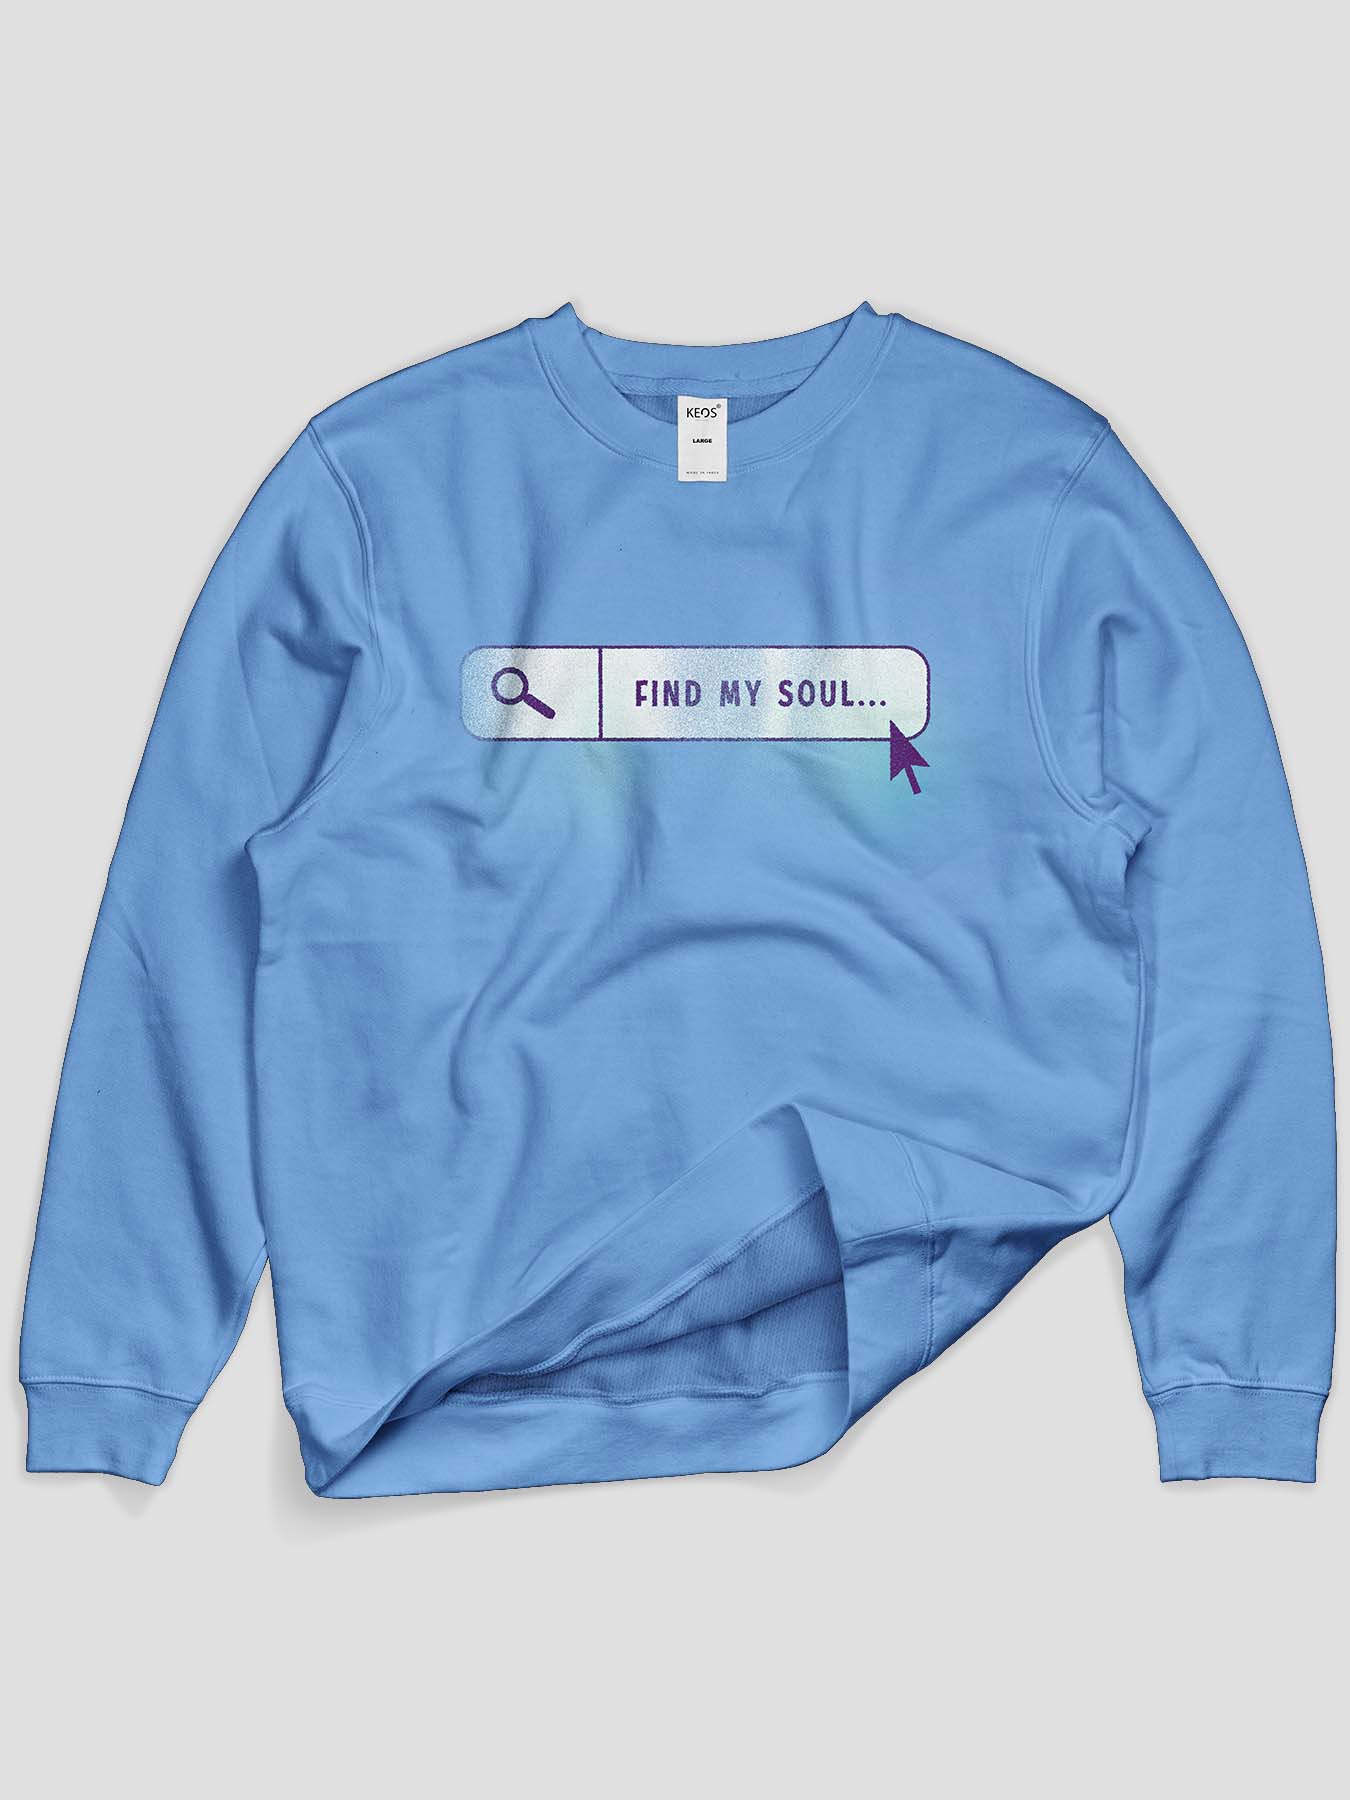 Find My Soul Graphic Sweatshirt - keos.life